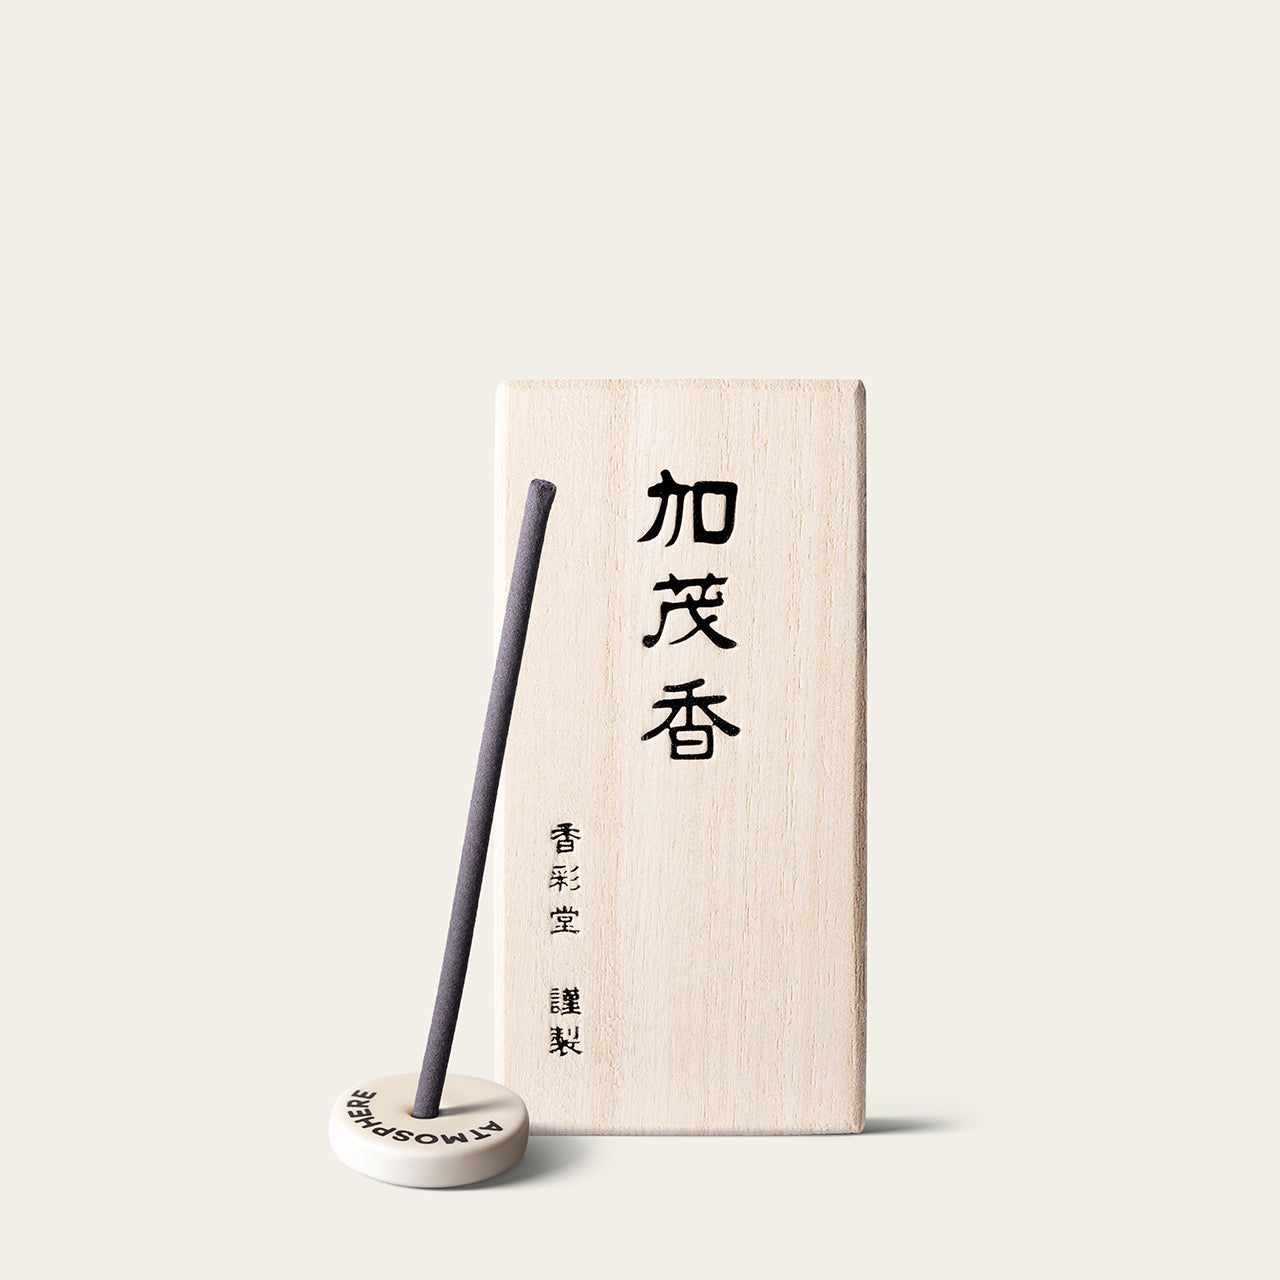 Kousaido Scenic Charm Whispers of Kamo Japanese incense sticks (30 sticks) with Atmosphere ceramic incense holder